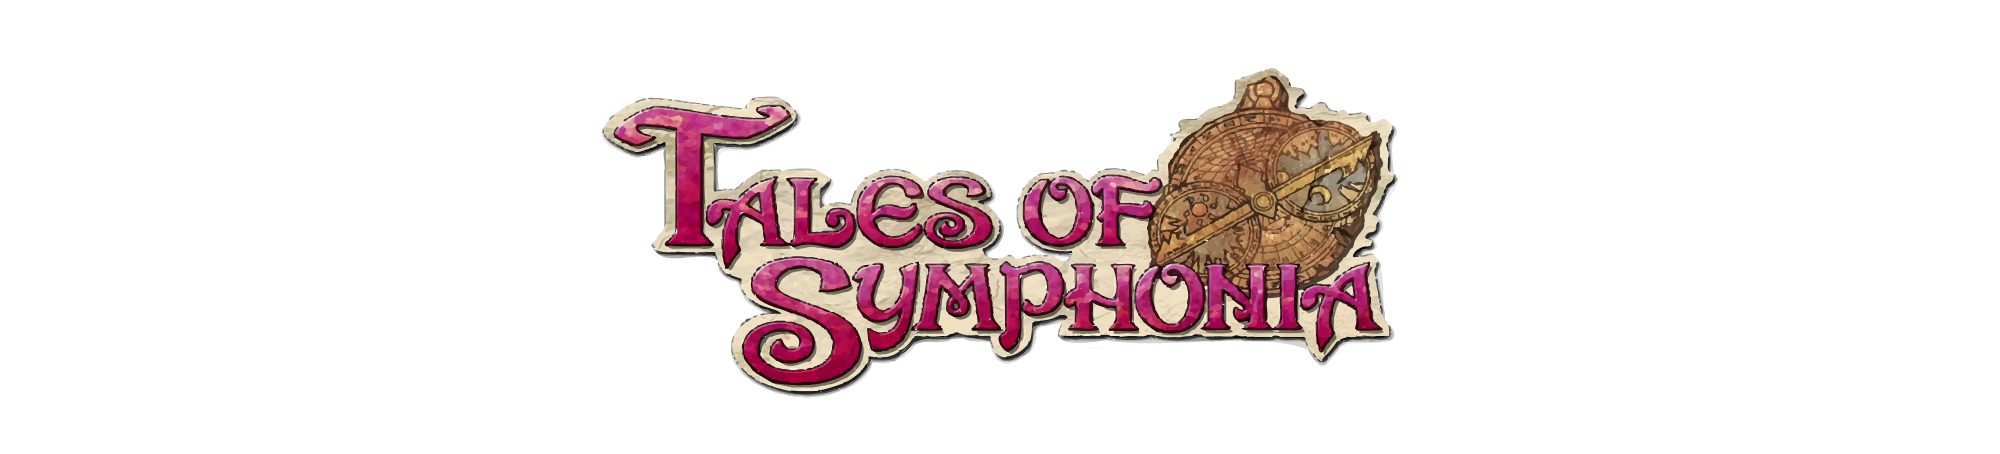 Tales of Symphonia Battle